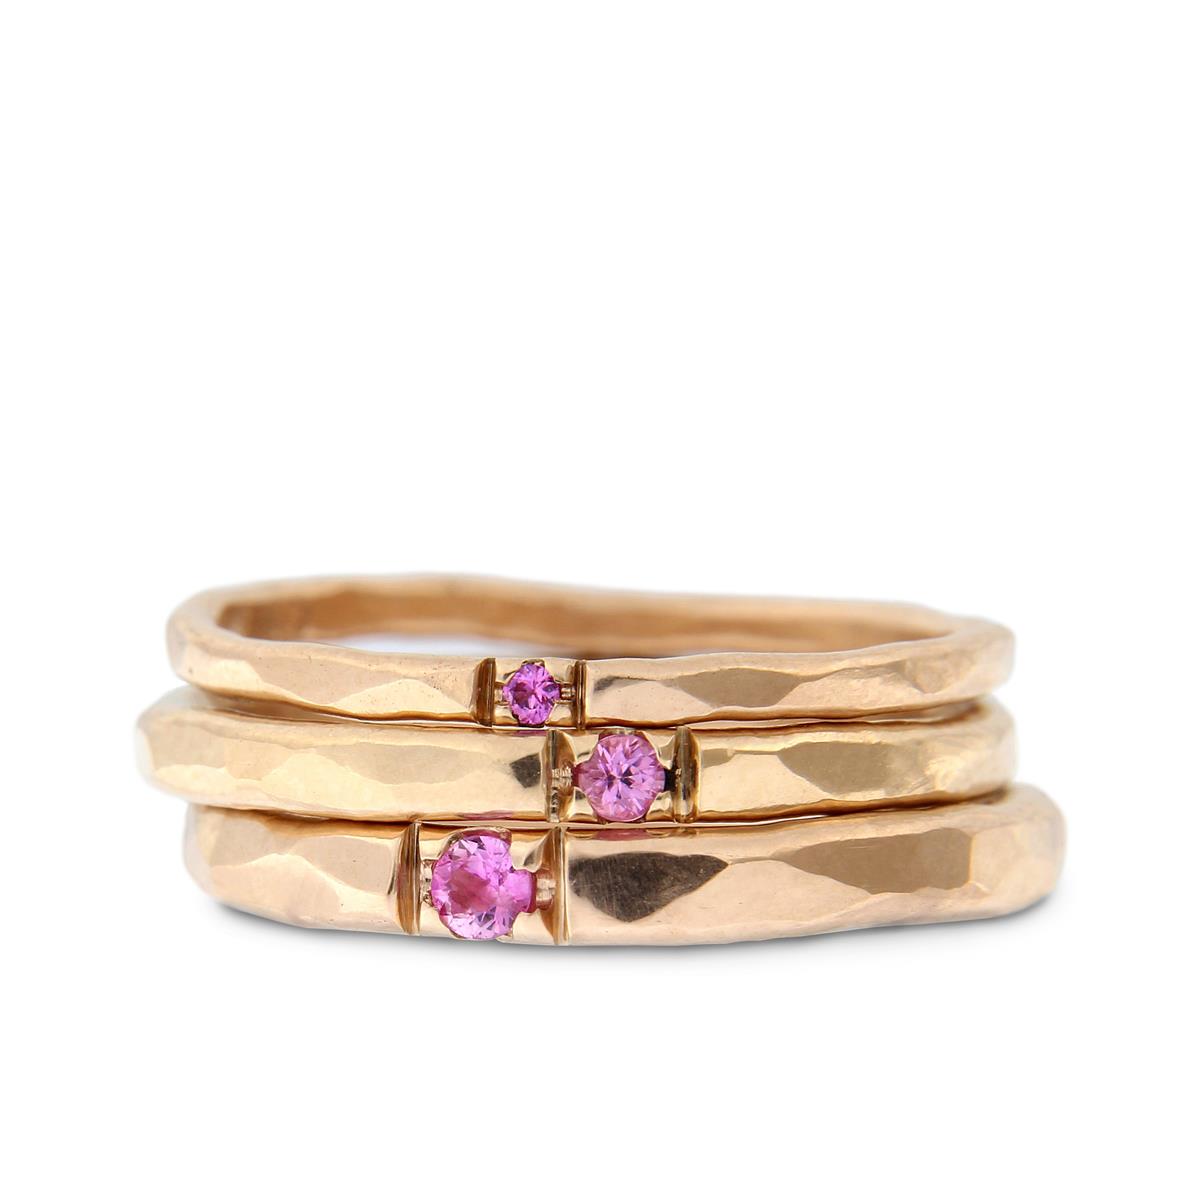 Katie g. Jewellery_Stack - Hammered Rings 1,5 bis 2,5mm in 14kt. Roségold mit rosa Saphir